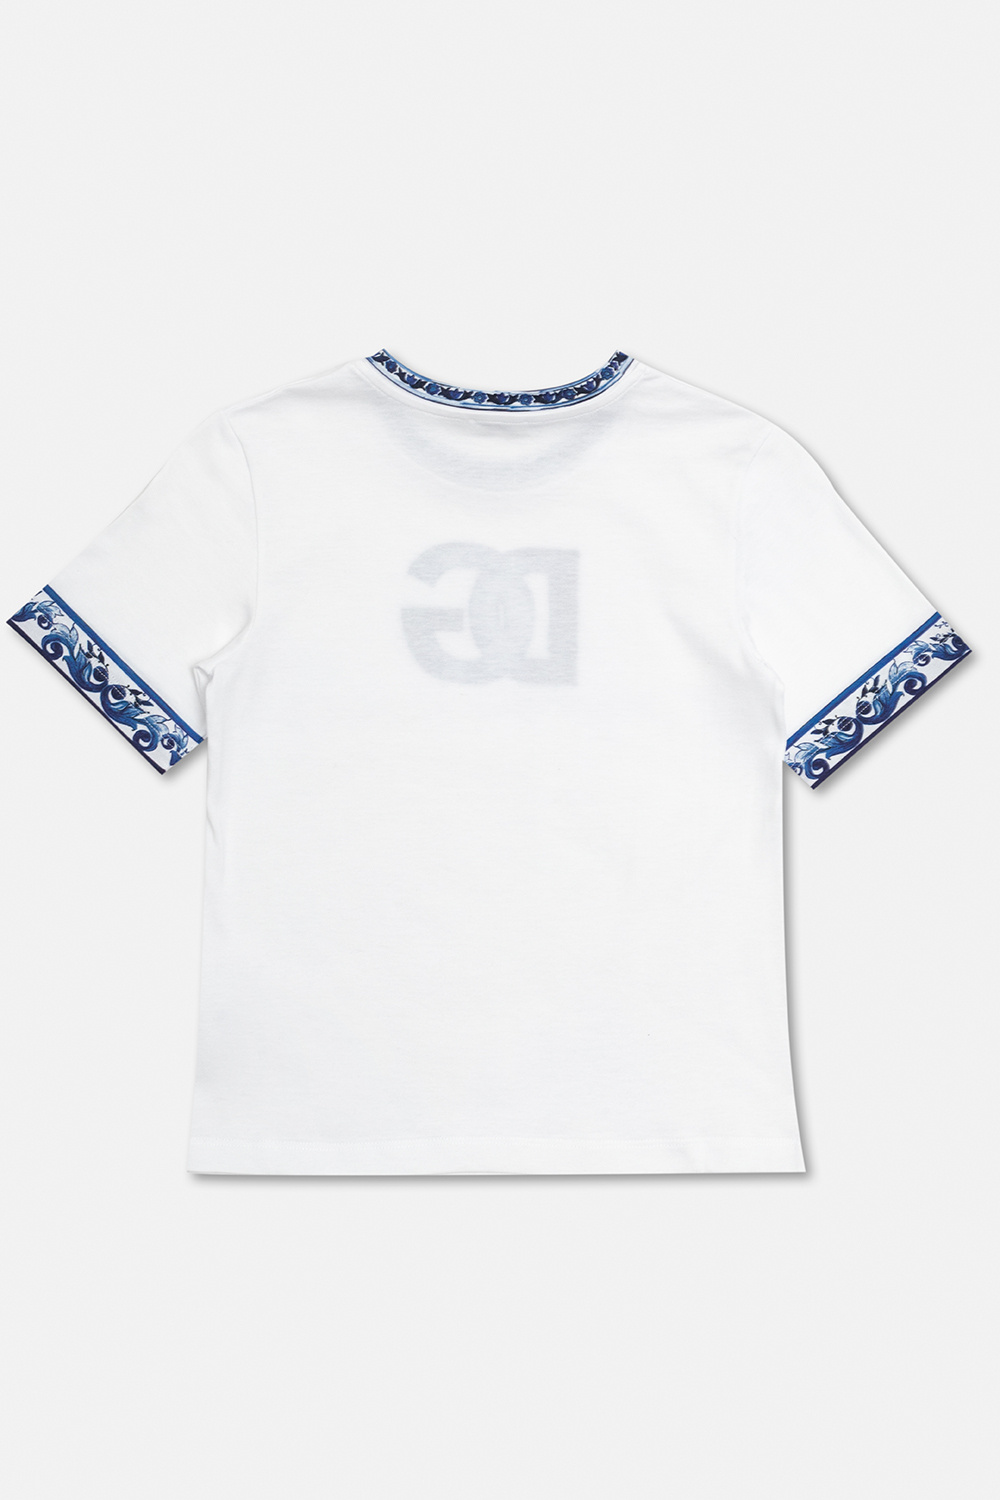 Dolce & Gabbana high-waisted floral-print shorts T-shirt with logo